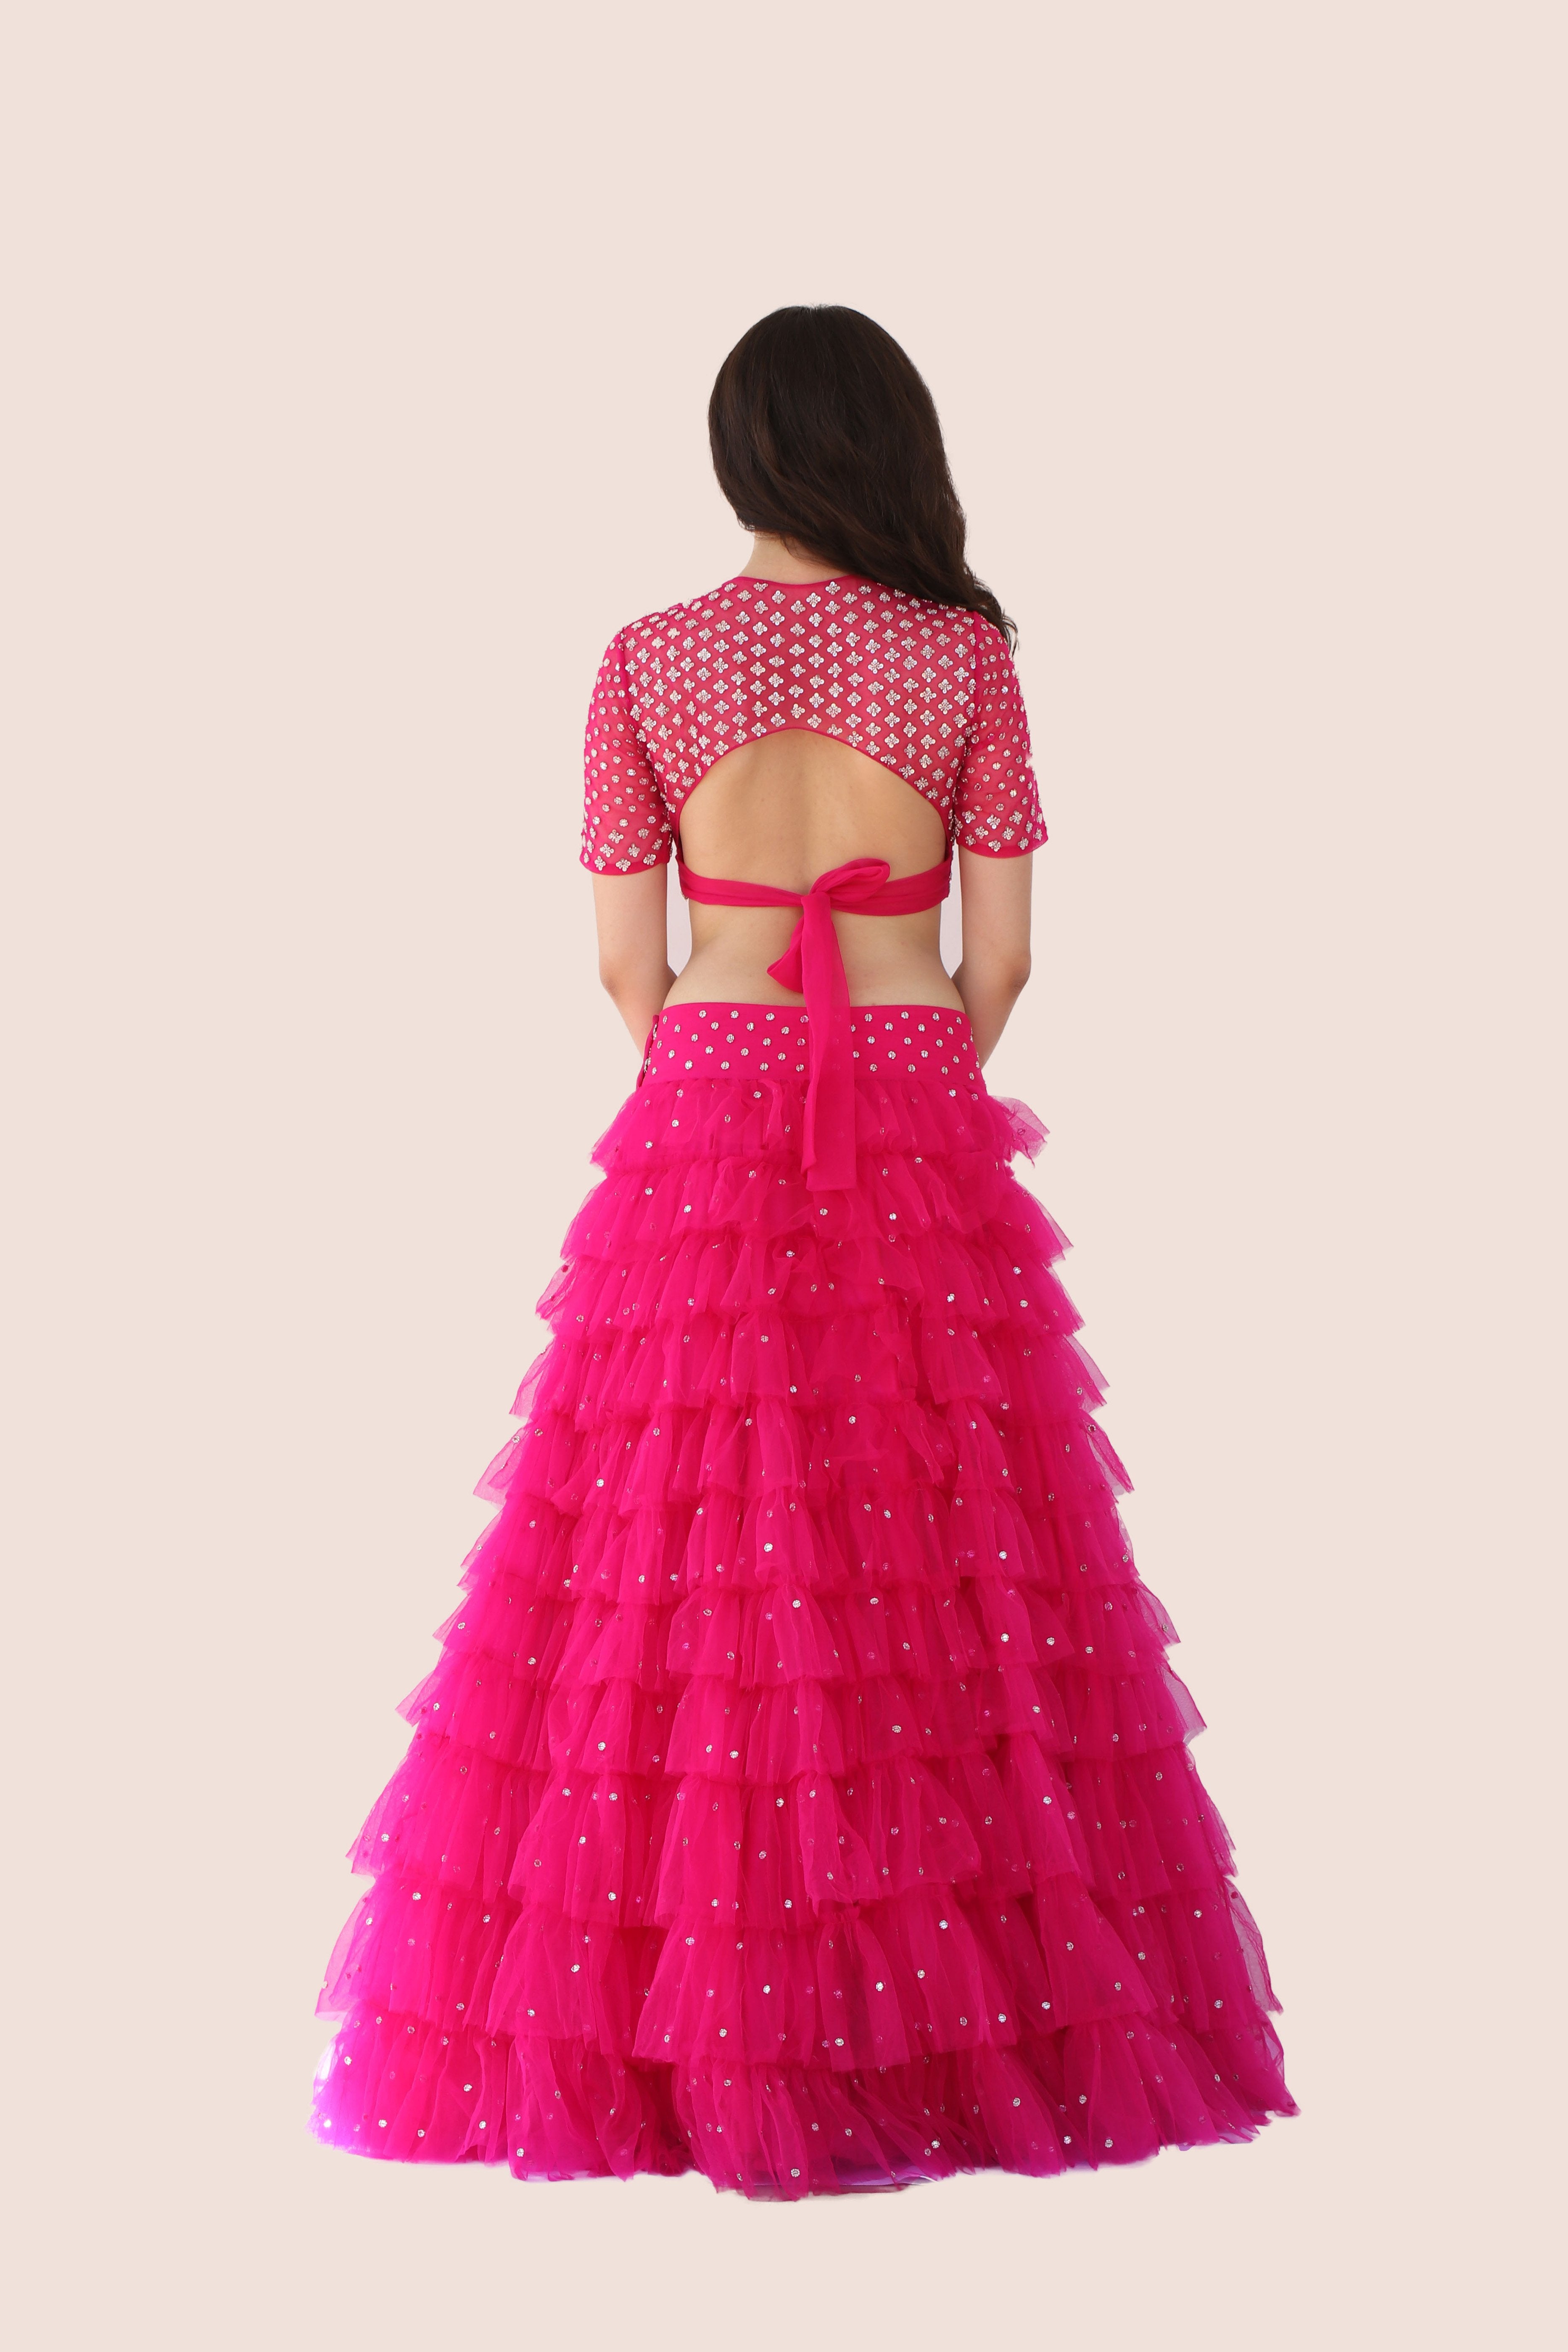 Label G3 By Gayathri Reddy - Pink Embroidered Lehanga Set